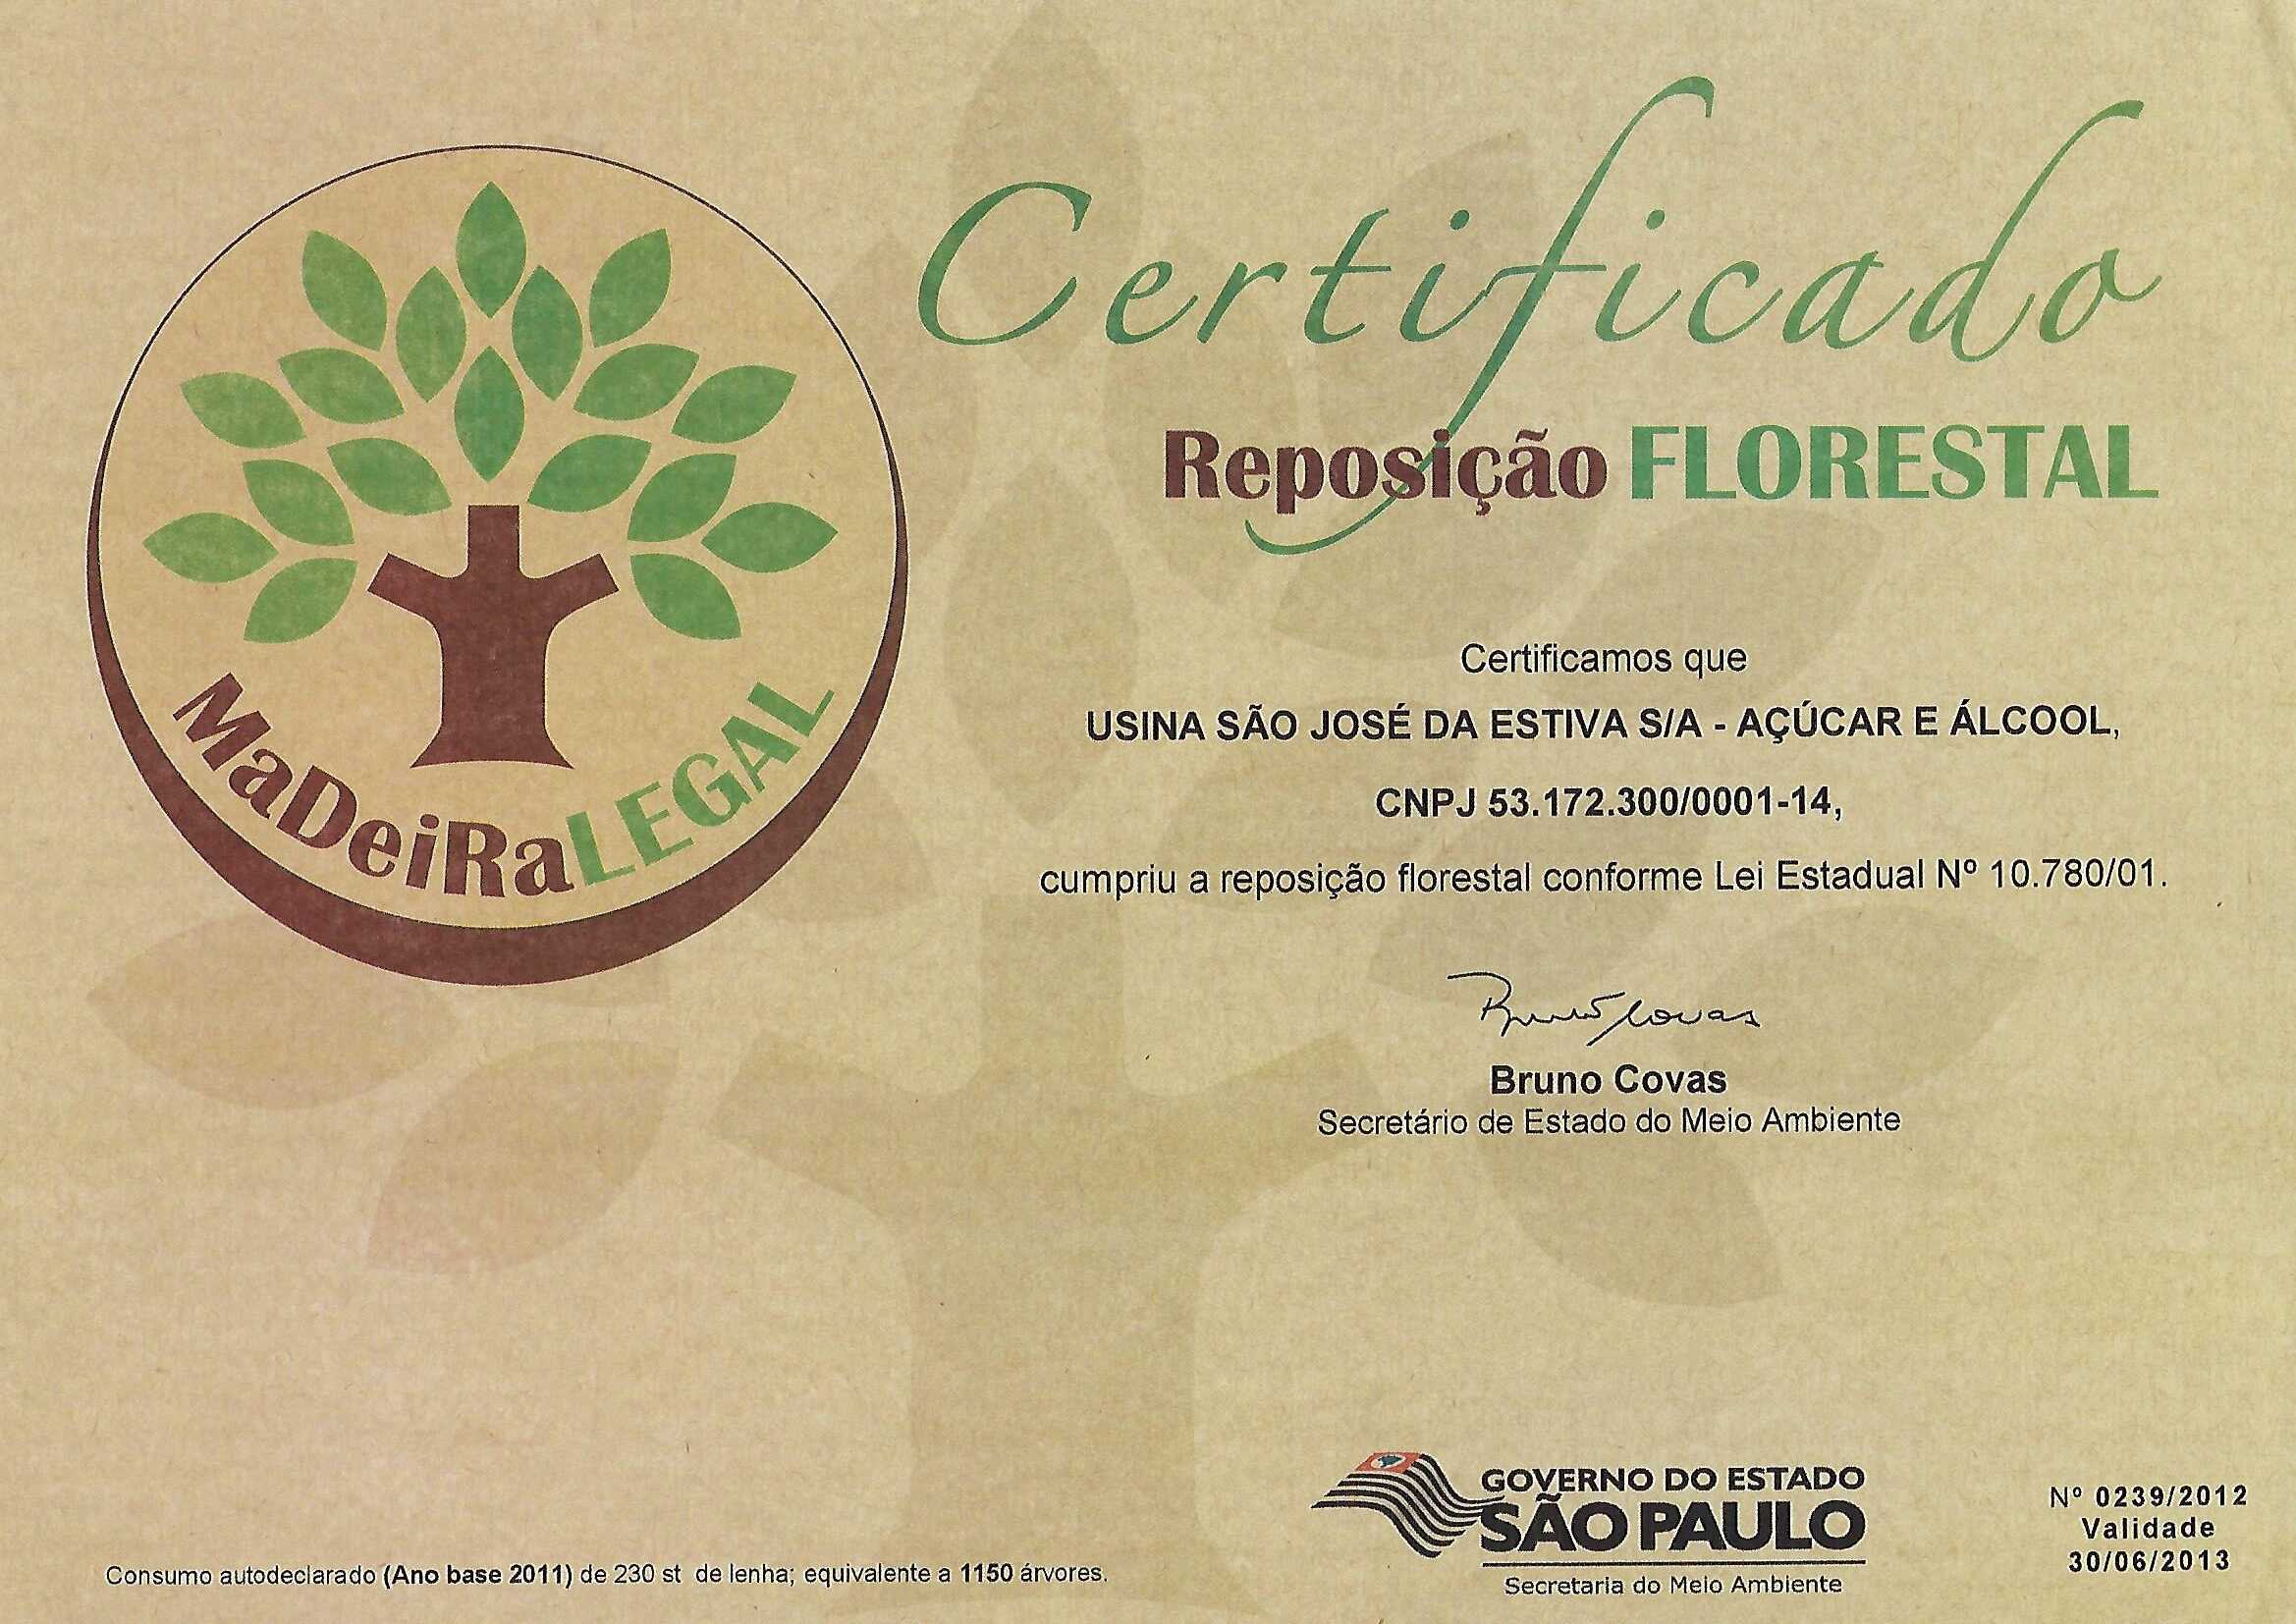 Certificado-Reposicao-Florestal.jpg (2.12 MB)